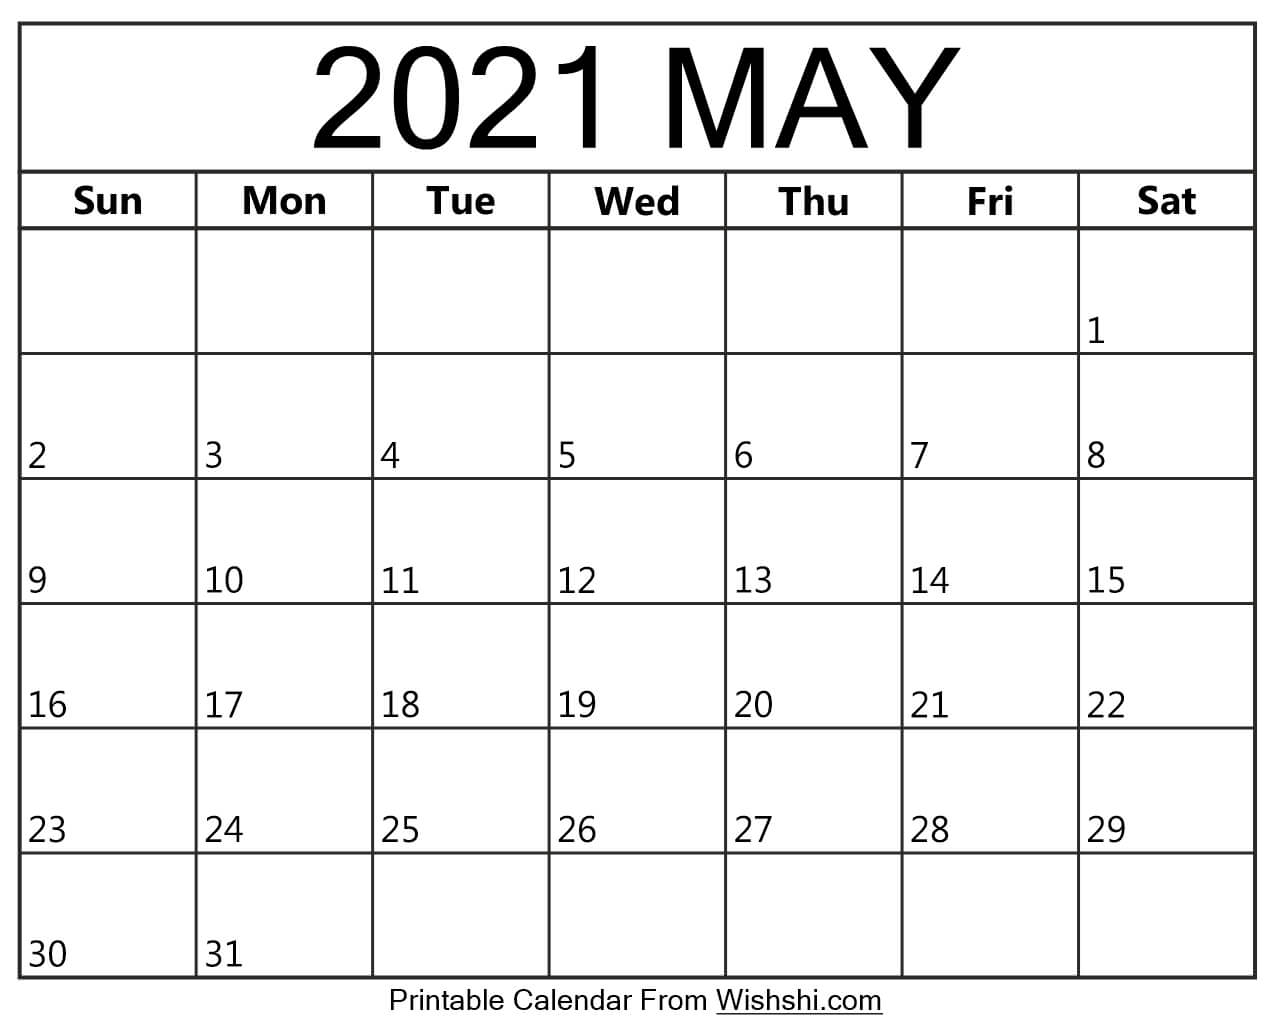 May 2021 Calendar Printable - Free Printable Calendars May